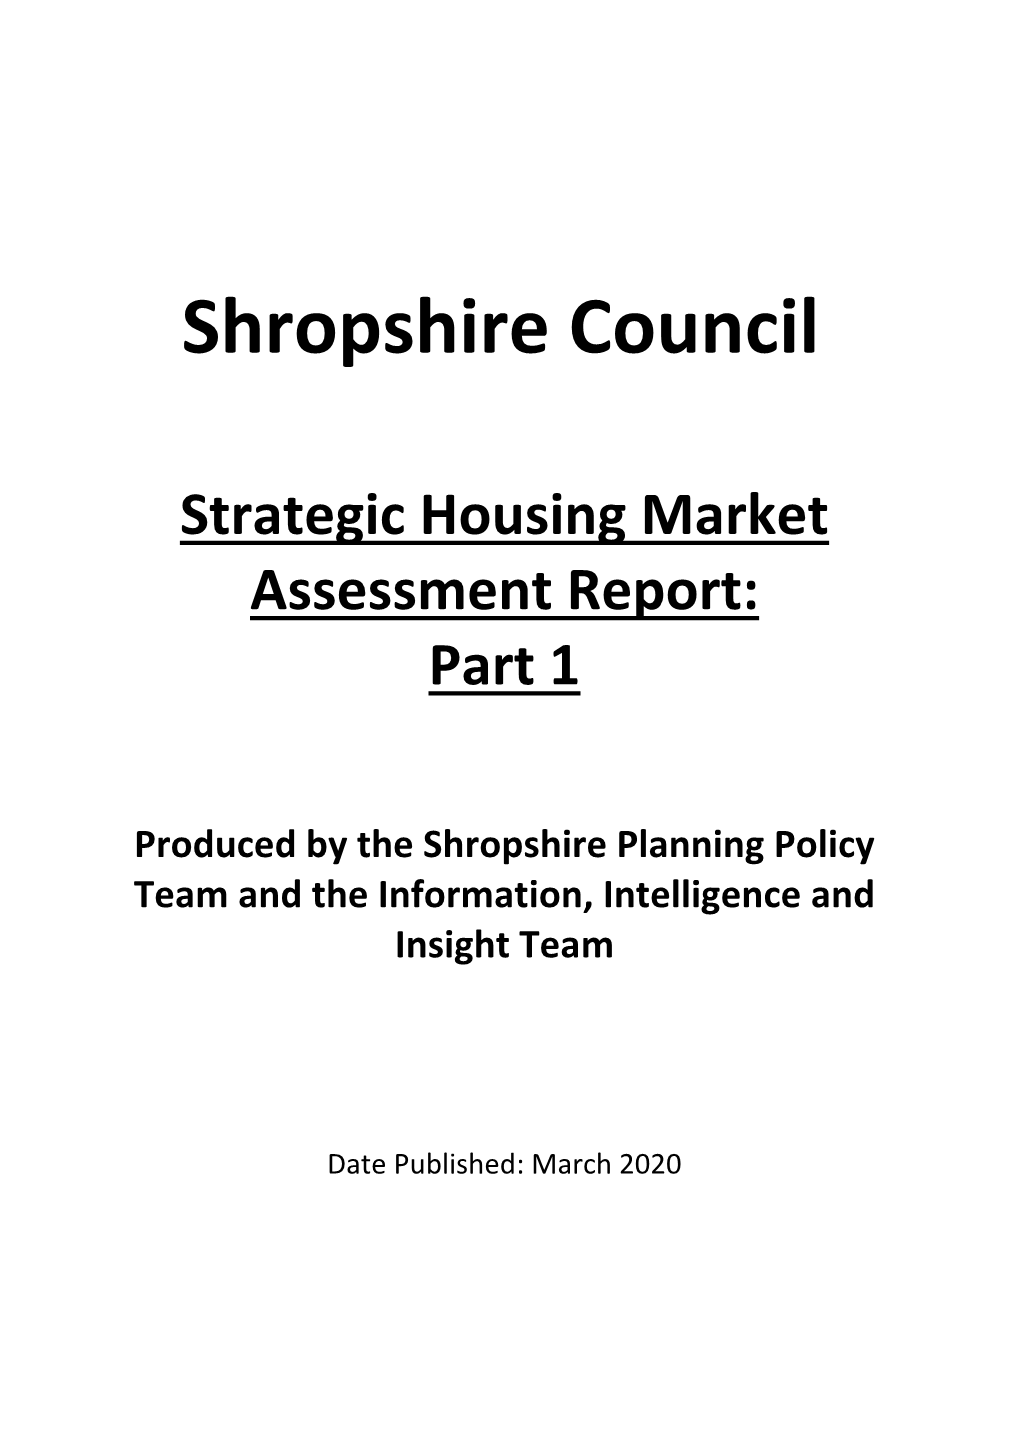 Strategic Housing Market Assessment Report: Part 1